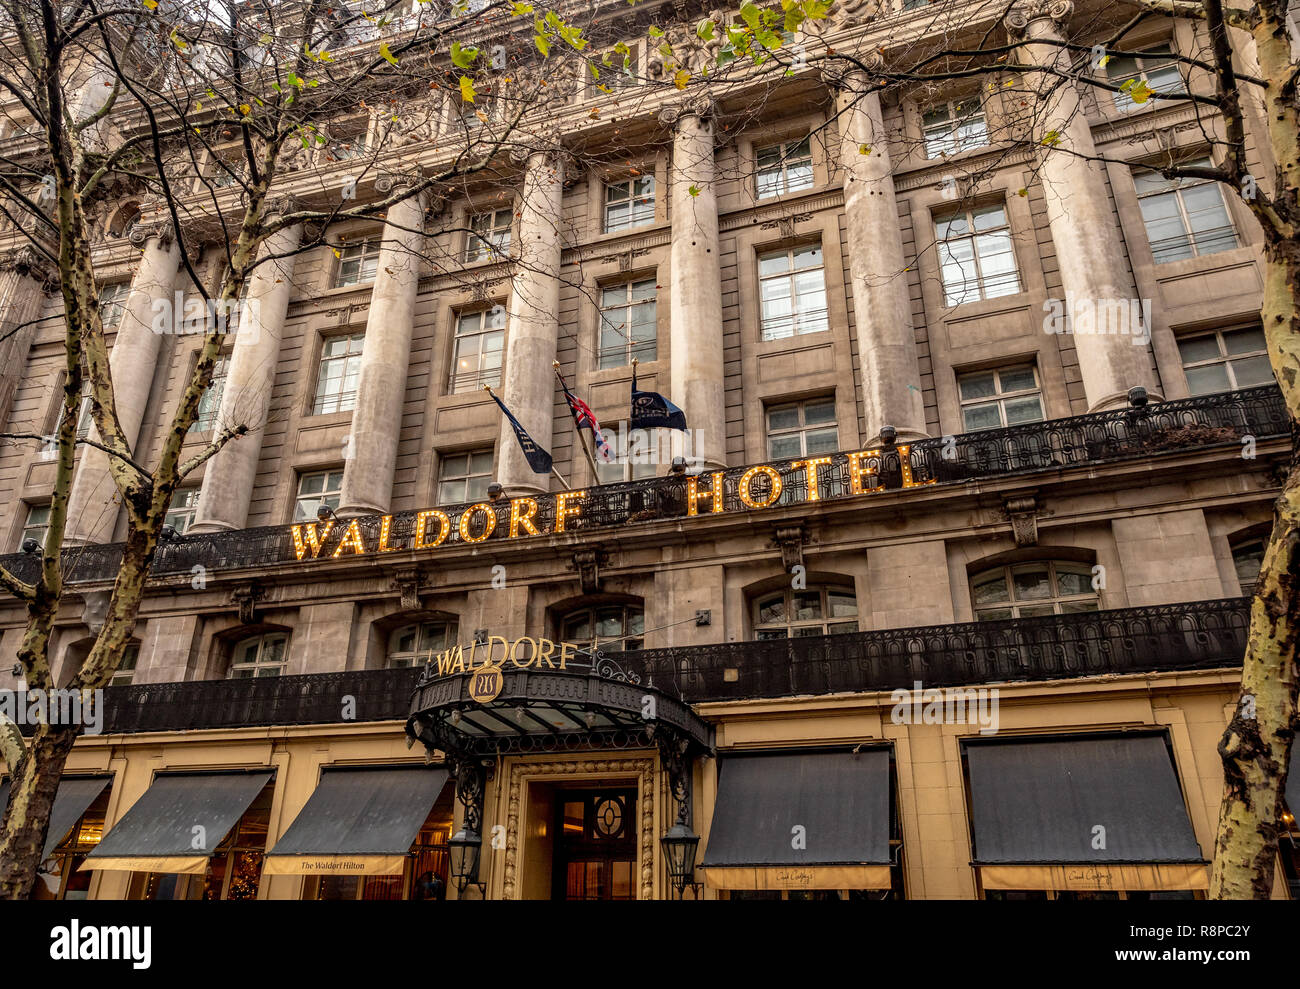 Exterior of the Waldorf Hotel, London, UK. Stock Photo